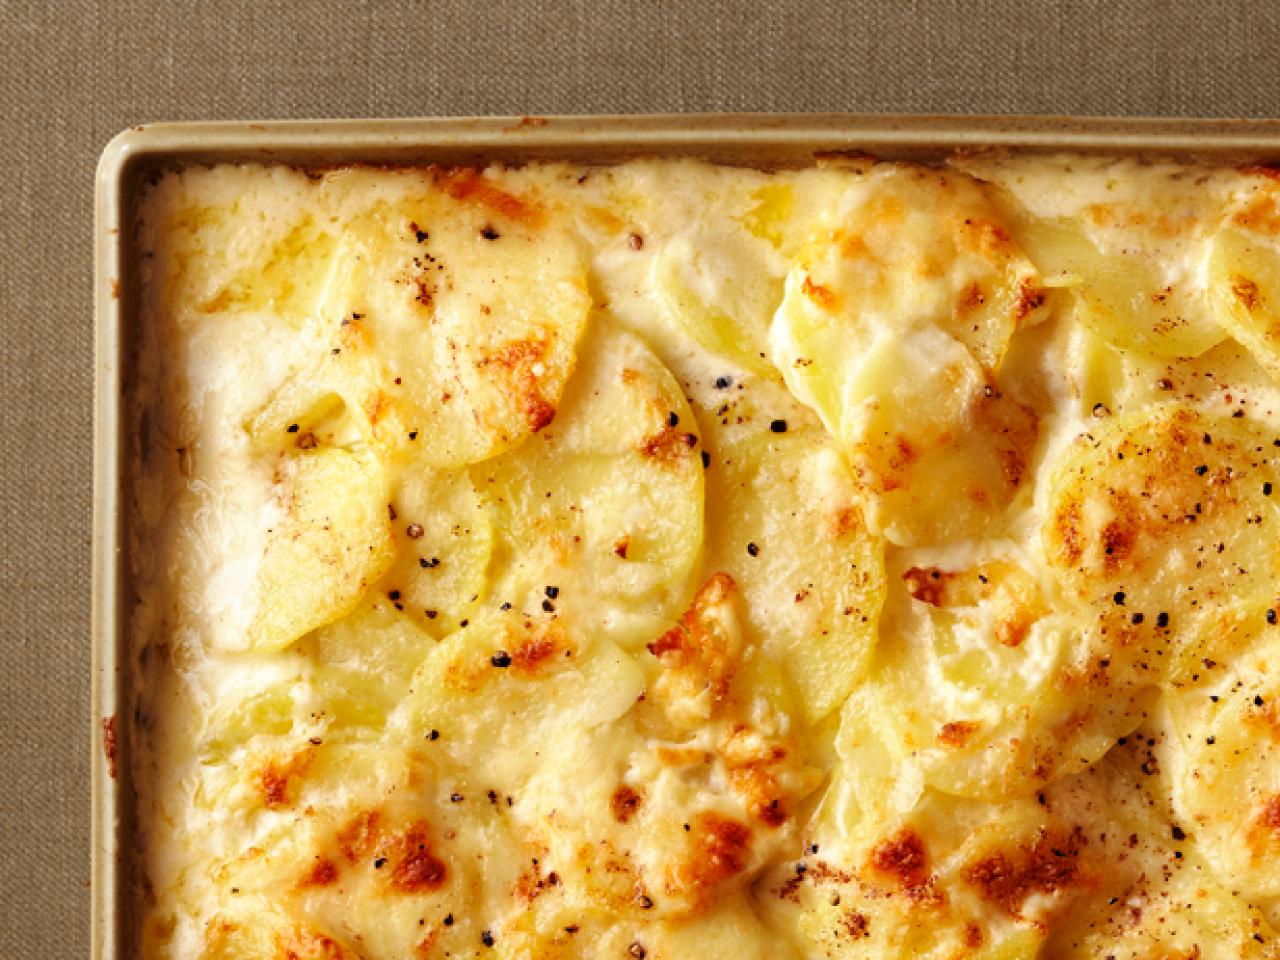 The Best Scalloped Potatoes - Perfect Cheesy Potatoes Side Dish